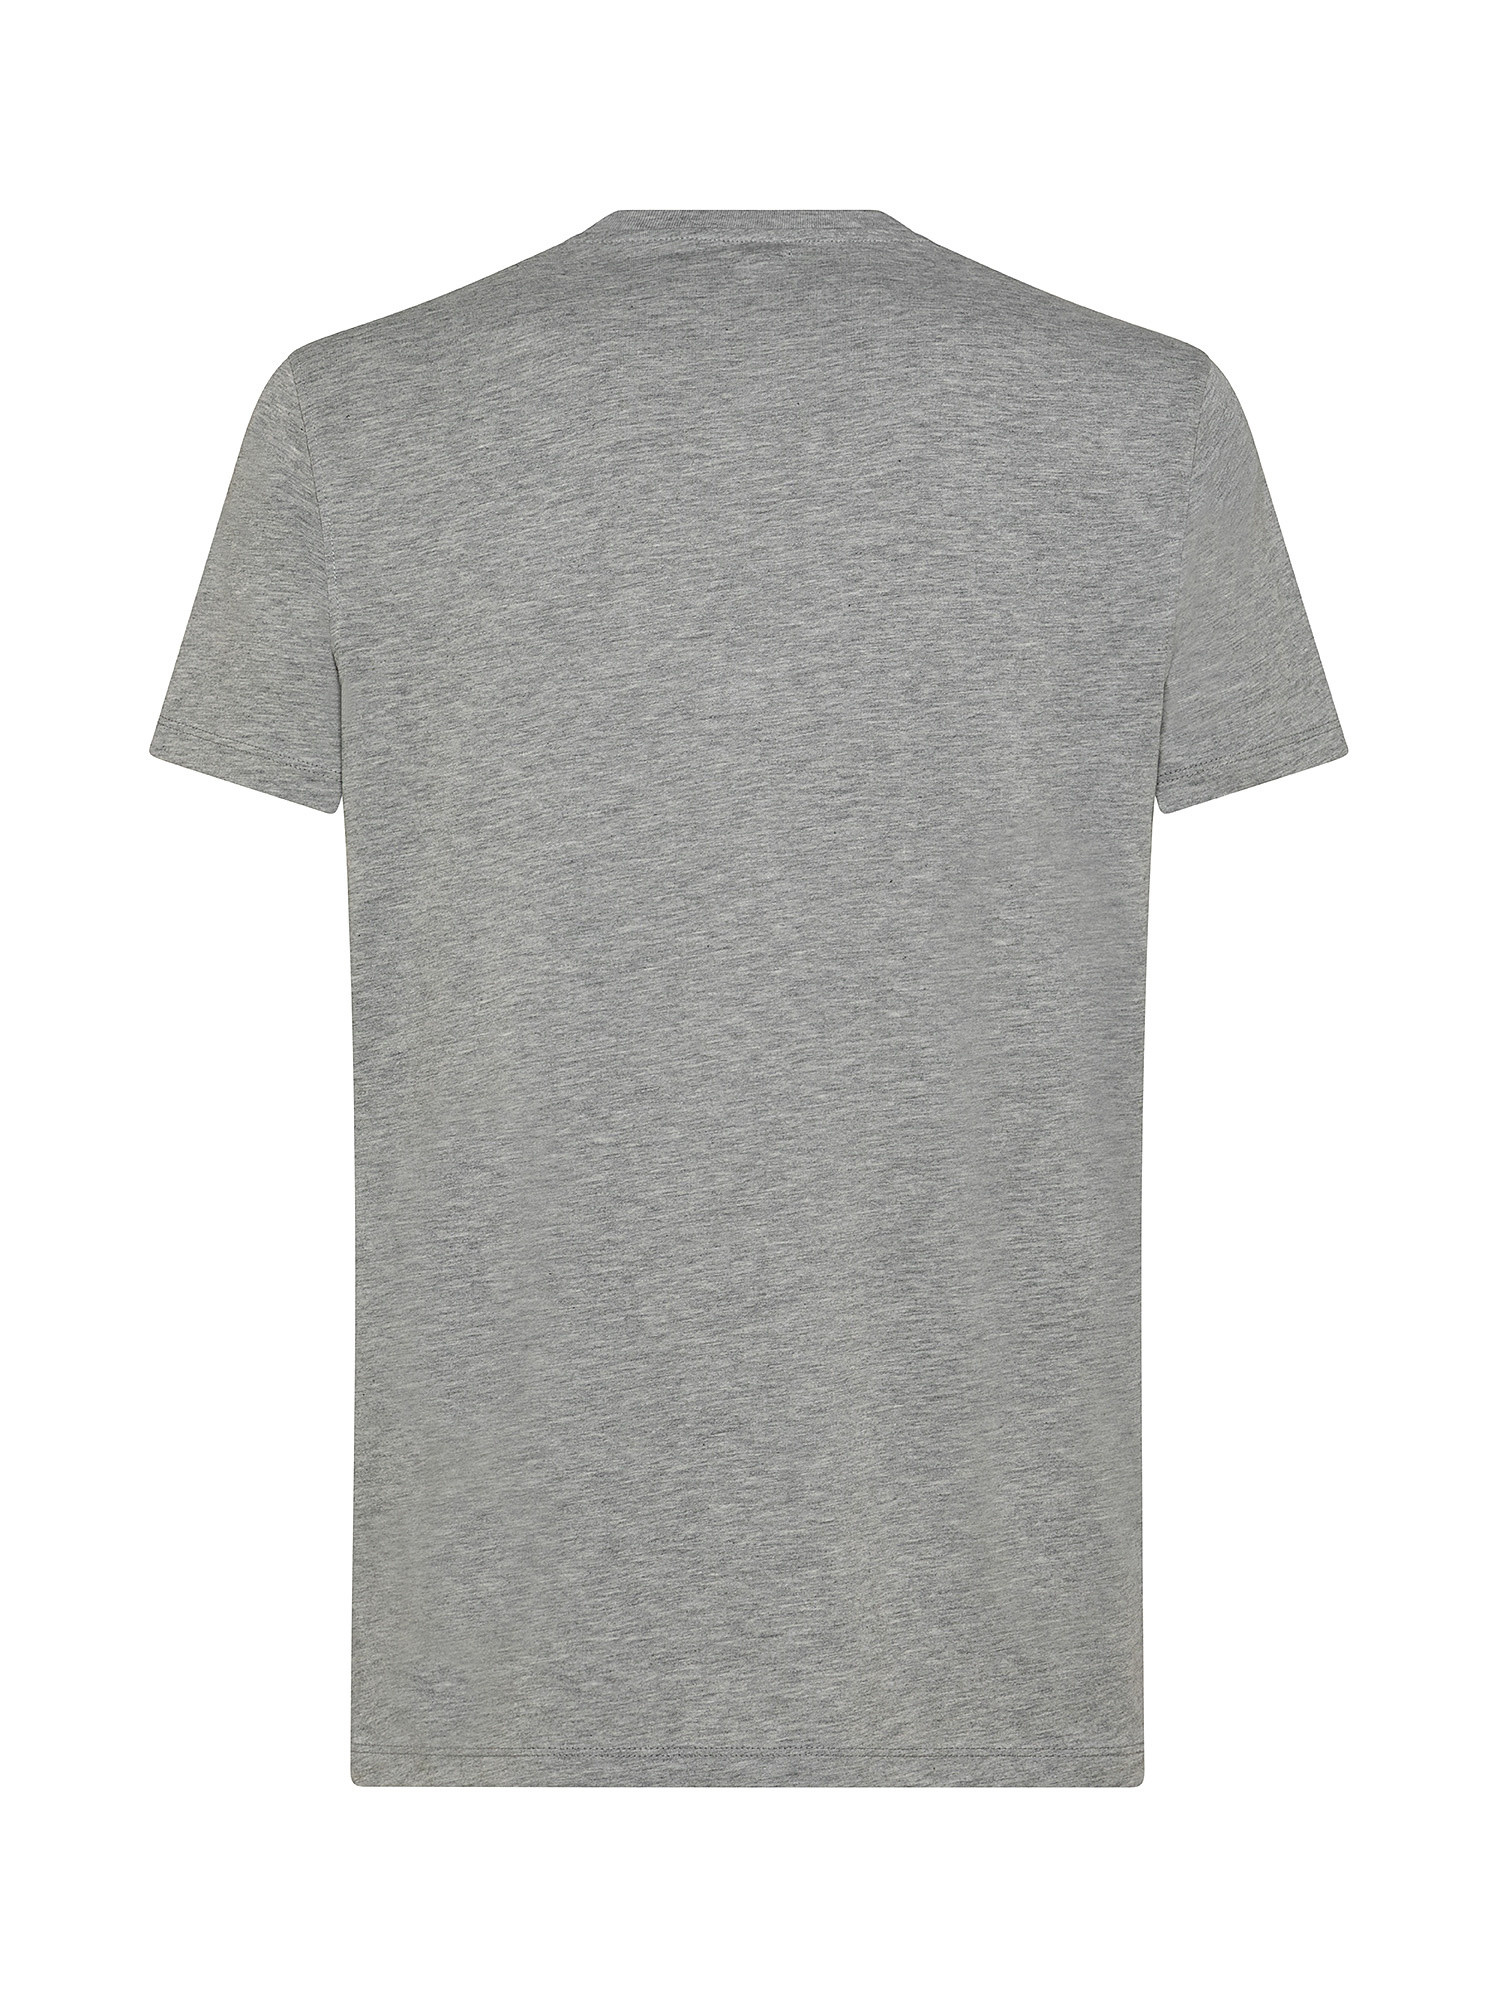 Luca D'Altieri - T-shirt girocollo cotone supima, Grigio, large image number 1